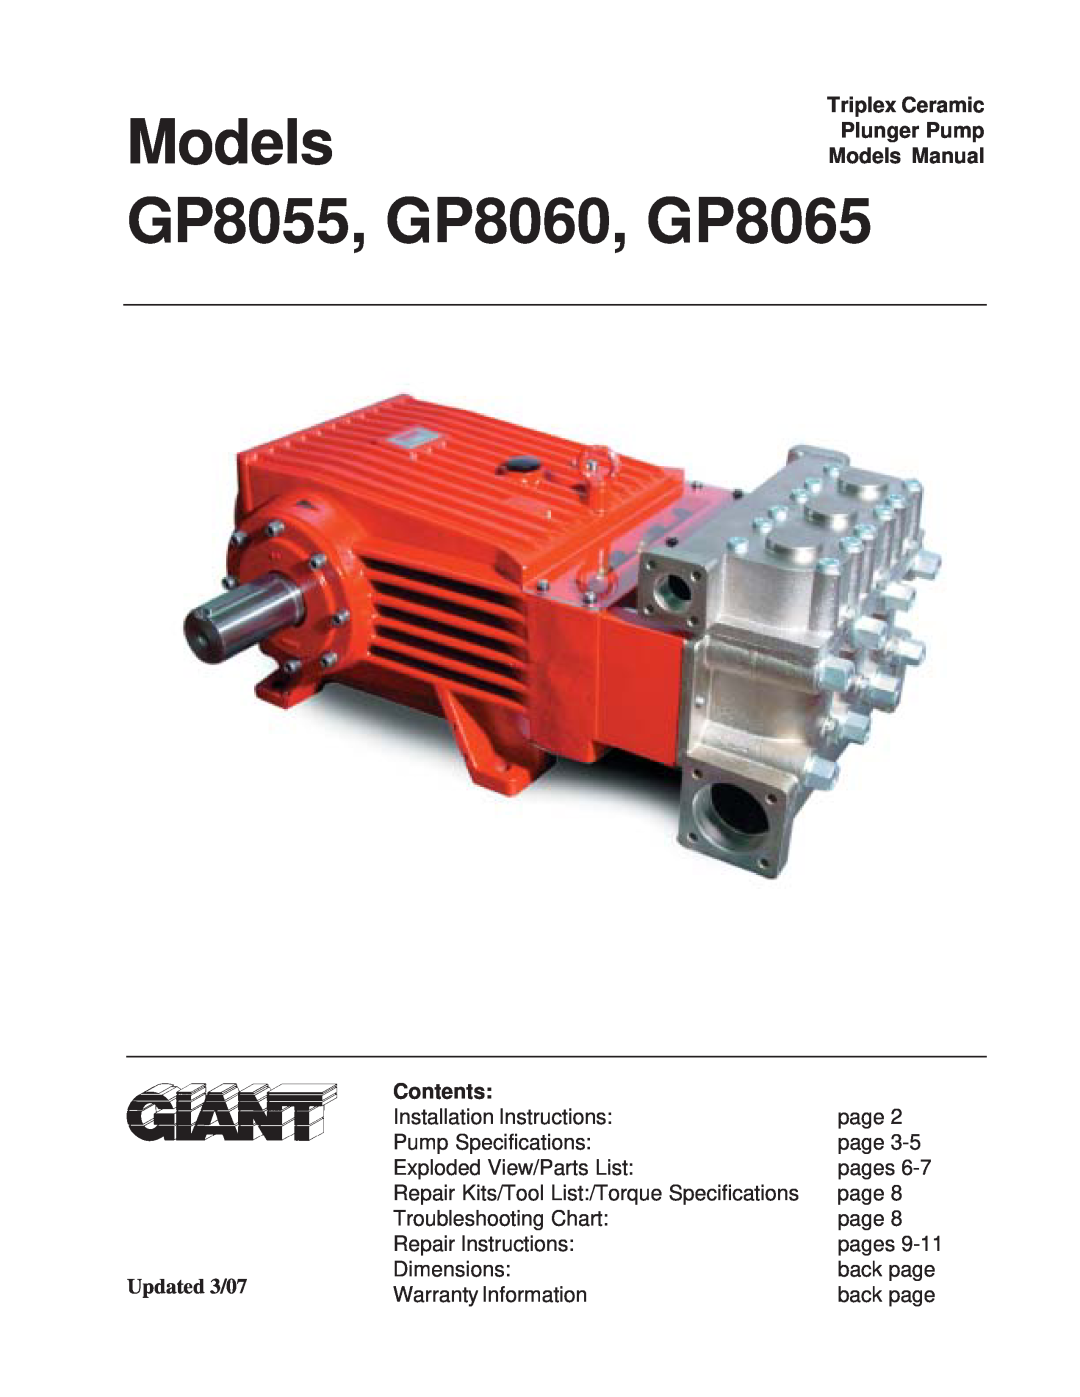 Giant GP8055, GP8060 installation instructions Triplex Ceramic ModelsPlunger Pump Models Manual, Contents, Updated 3/07 